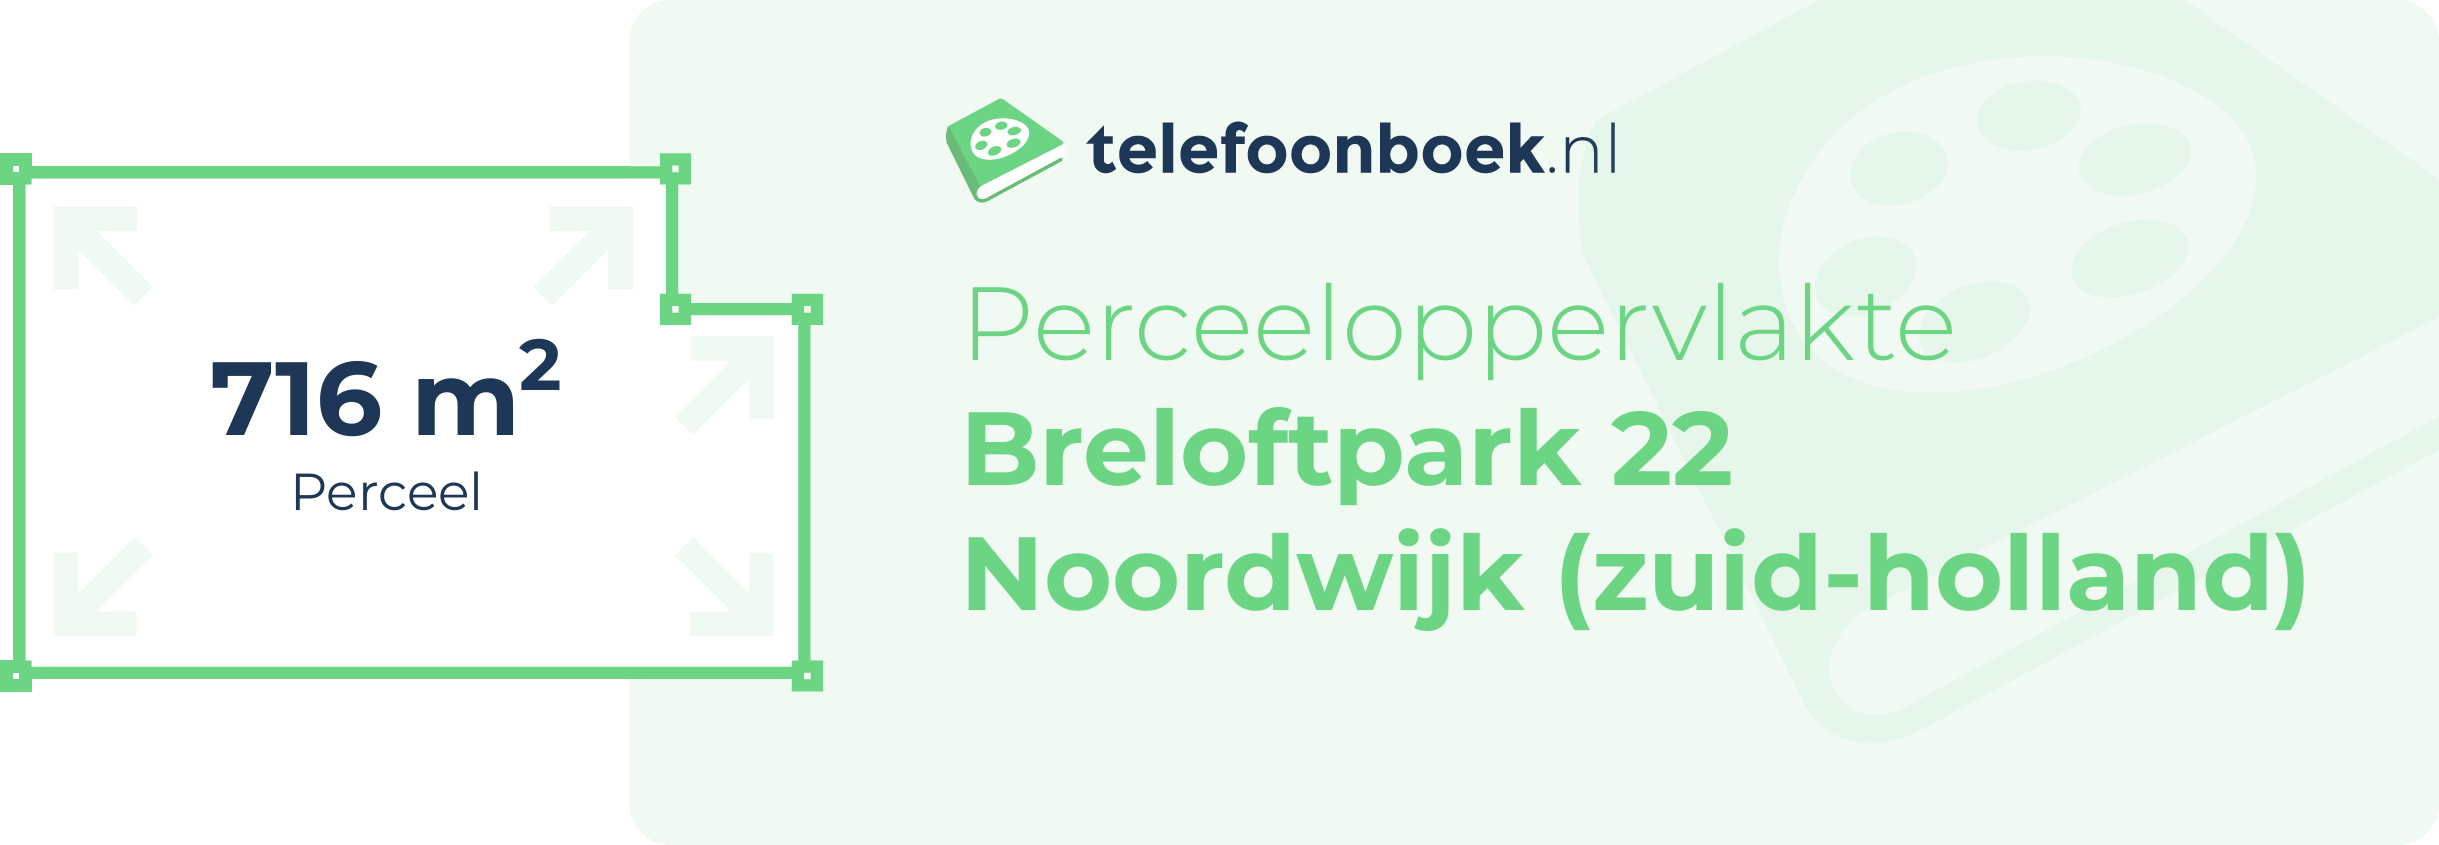 Perceeloppervlakte Breloftpark 22 Noordwijk (Zuid-Holland)